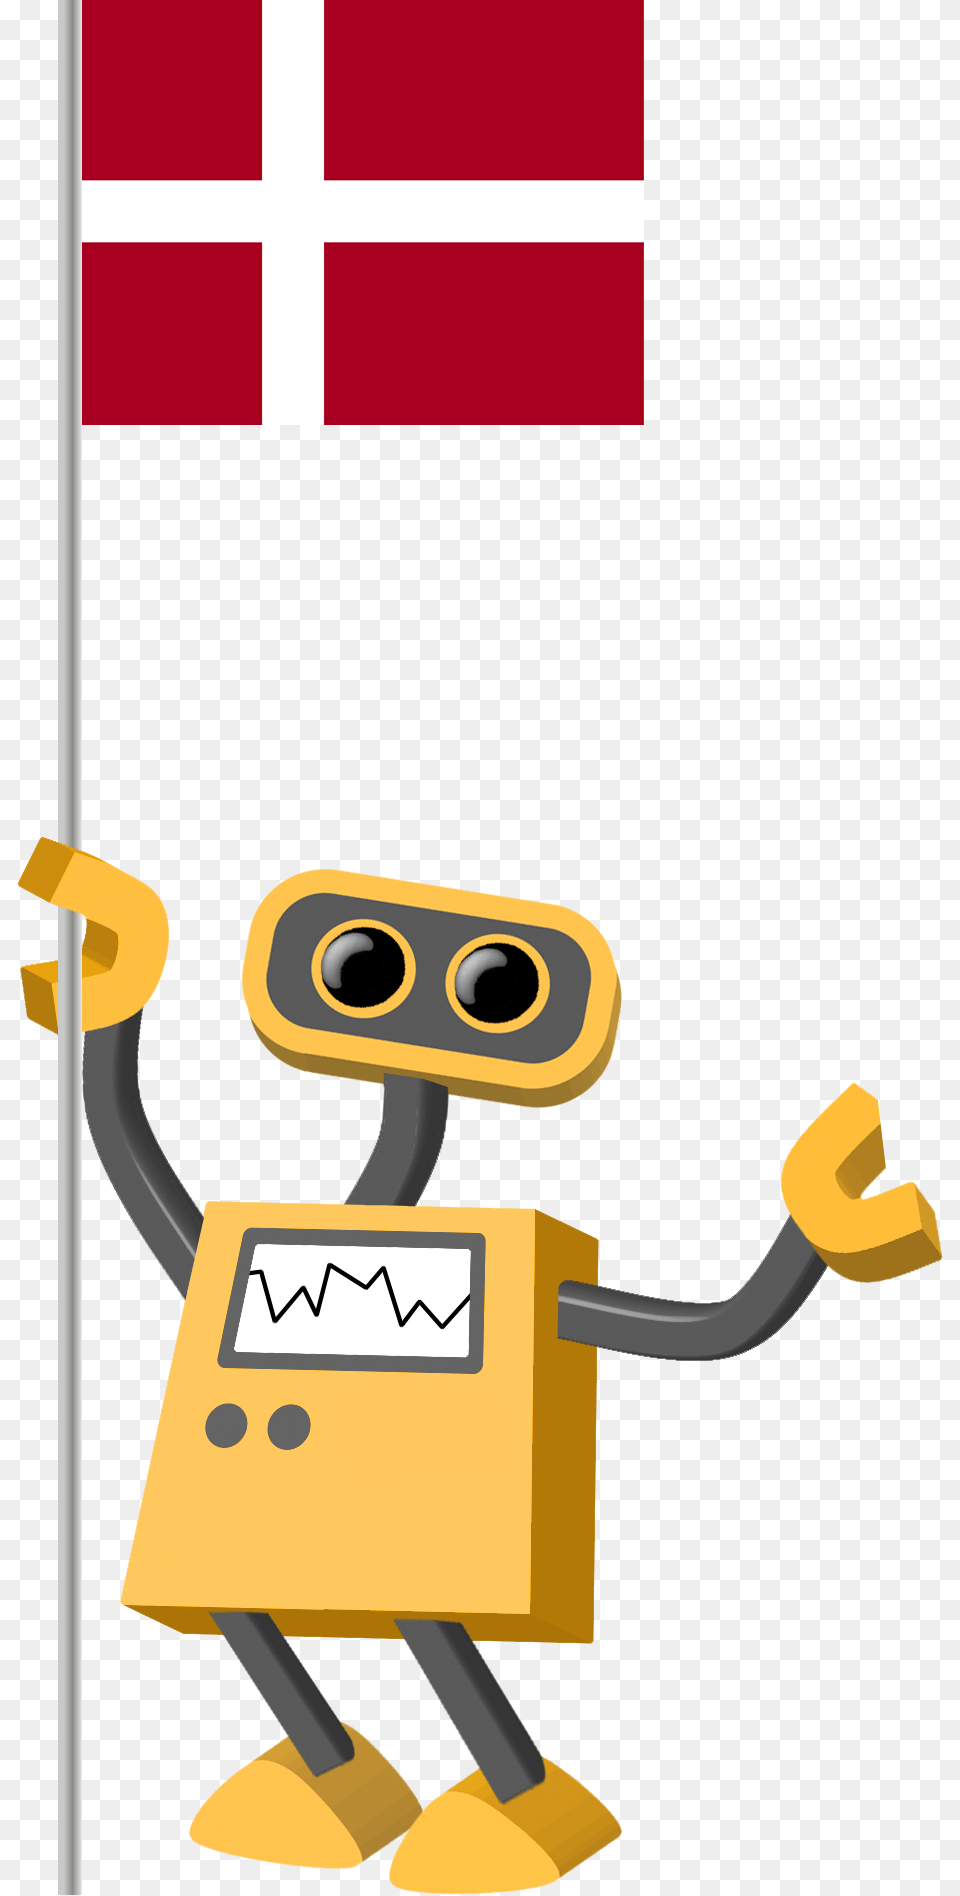 Stop Sign Cartoon Background, Robot Png Image